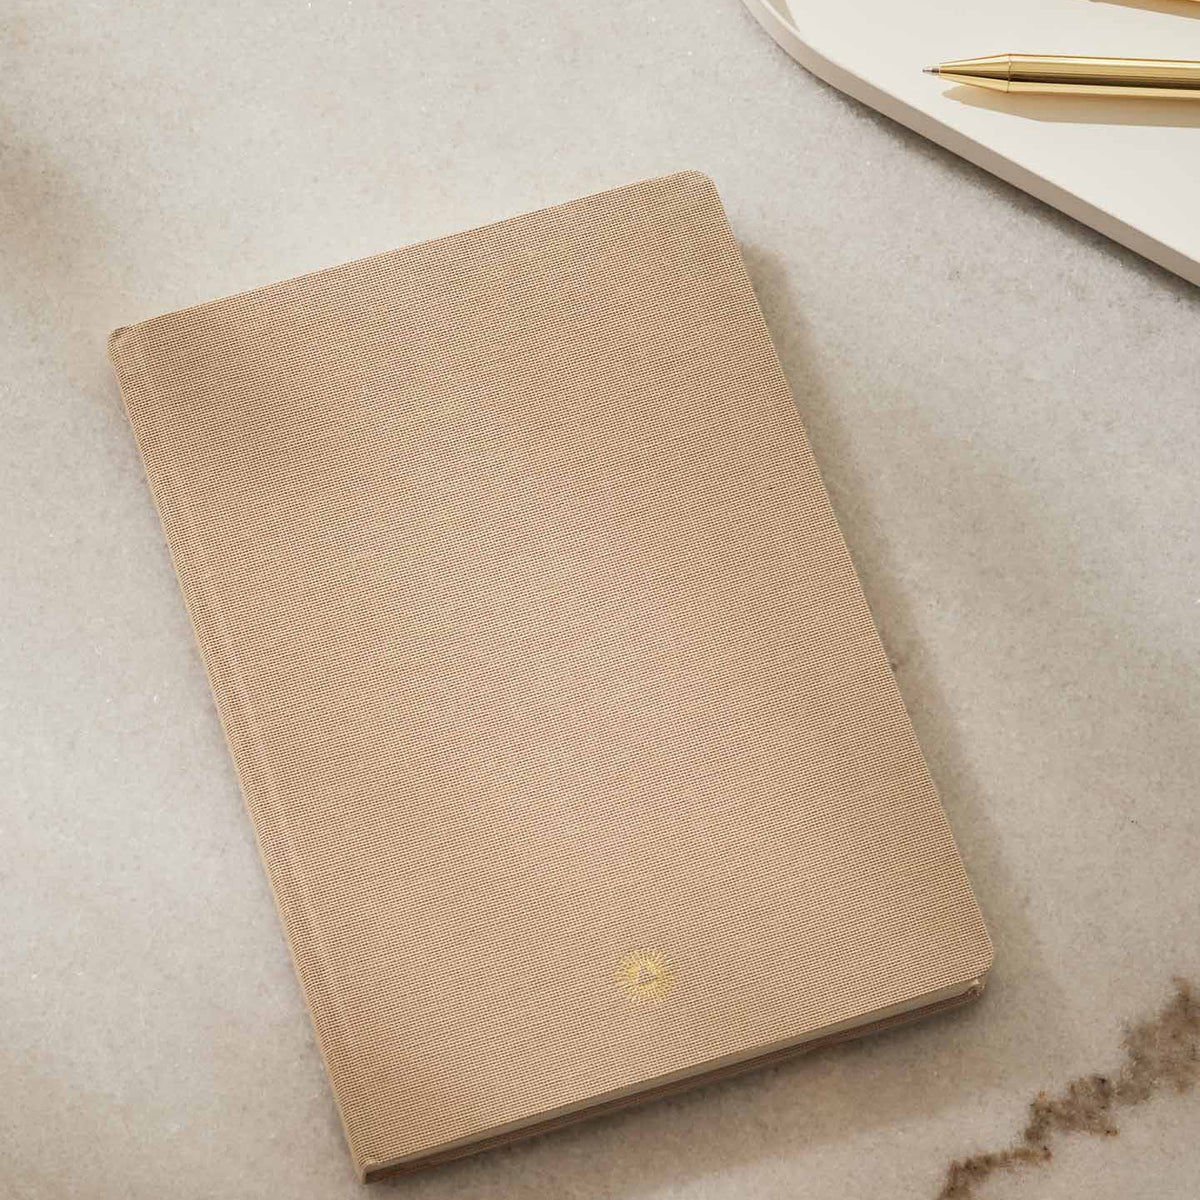 Louis Vuitton Pocket Agenda Cover Review + DIY & 4 Potential Uses 